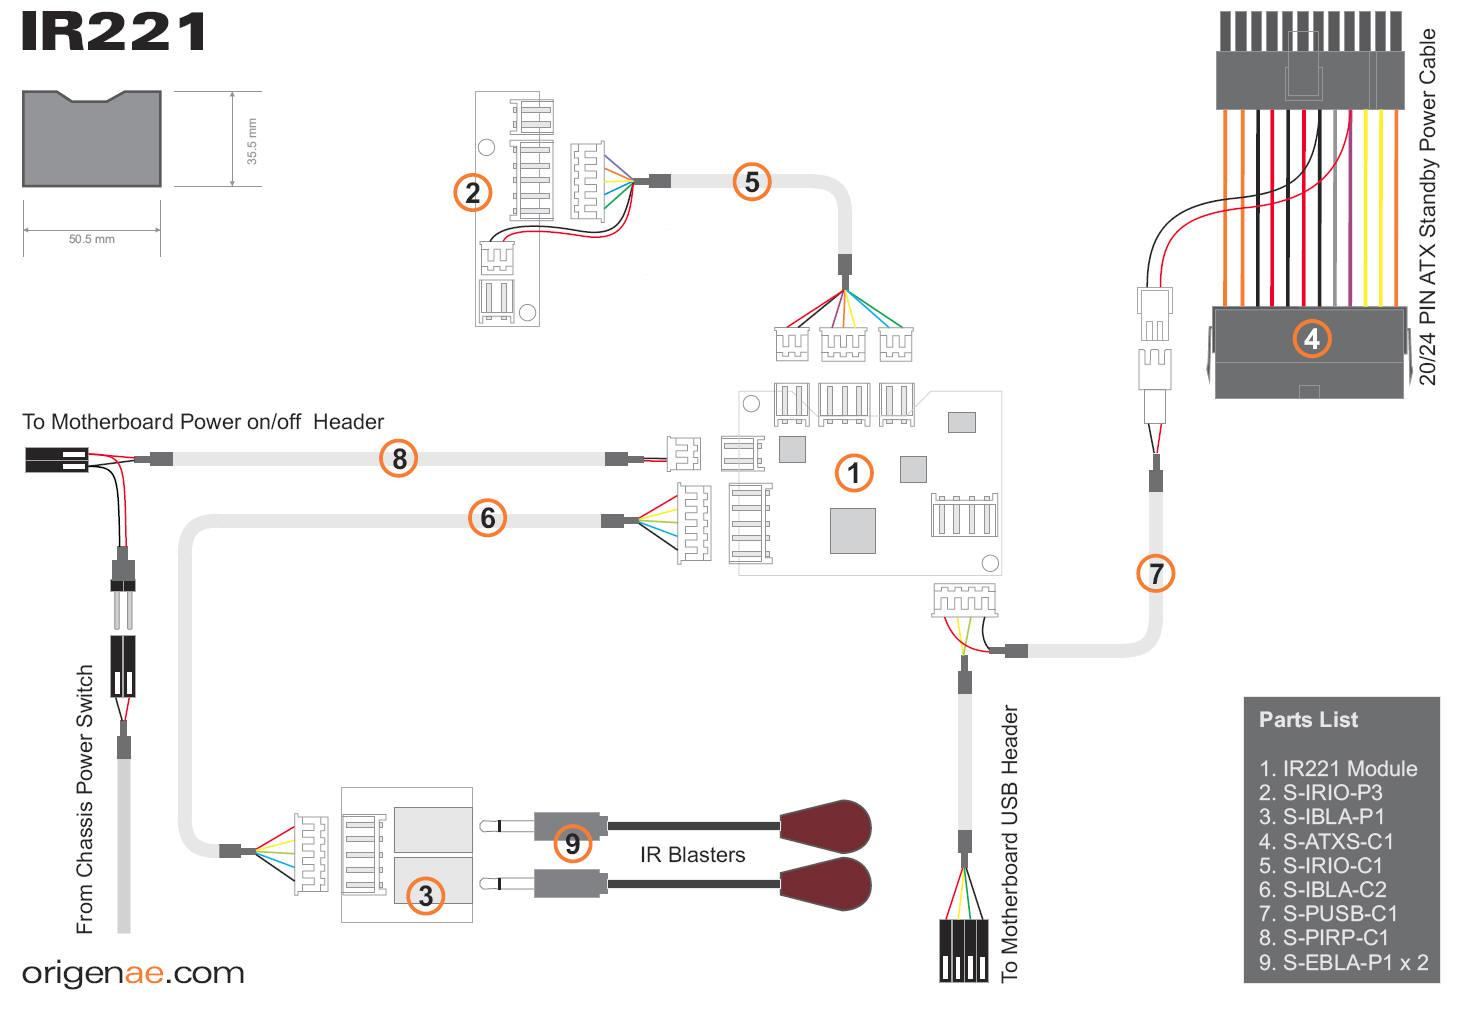 Ide Sata To Usb Cable Wiring Diagram | Manual E-Books - Sata To Usb Wiring Diagram